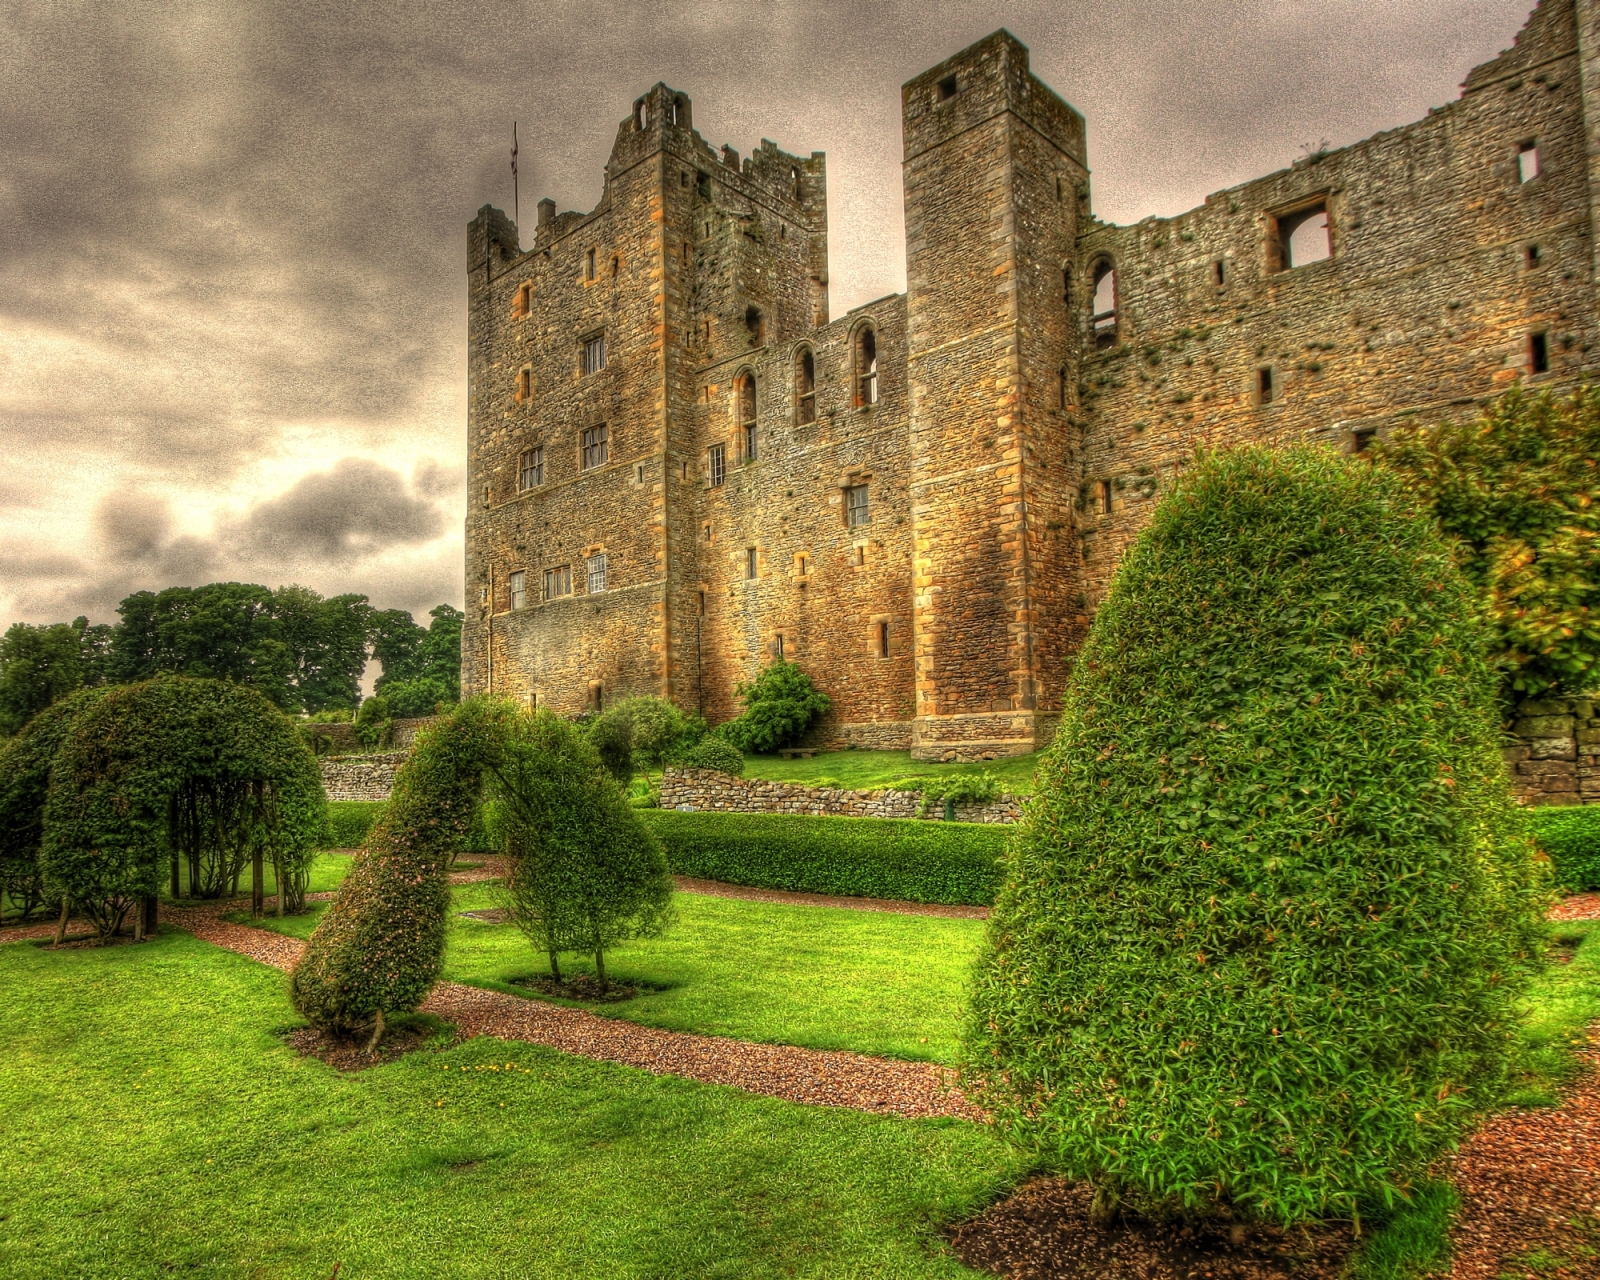 Bolton Castle Wallpapers